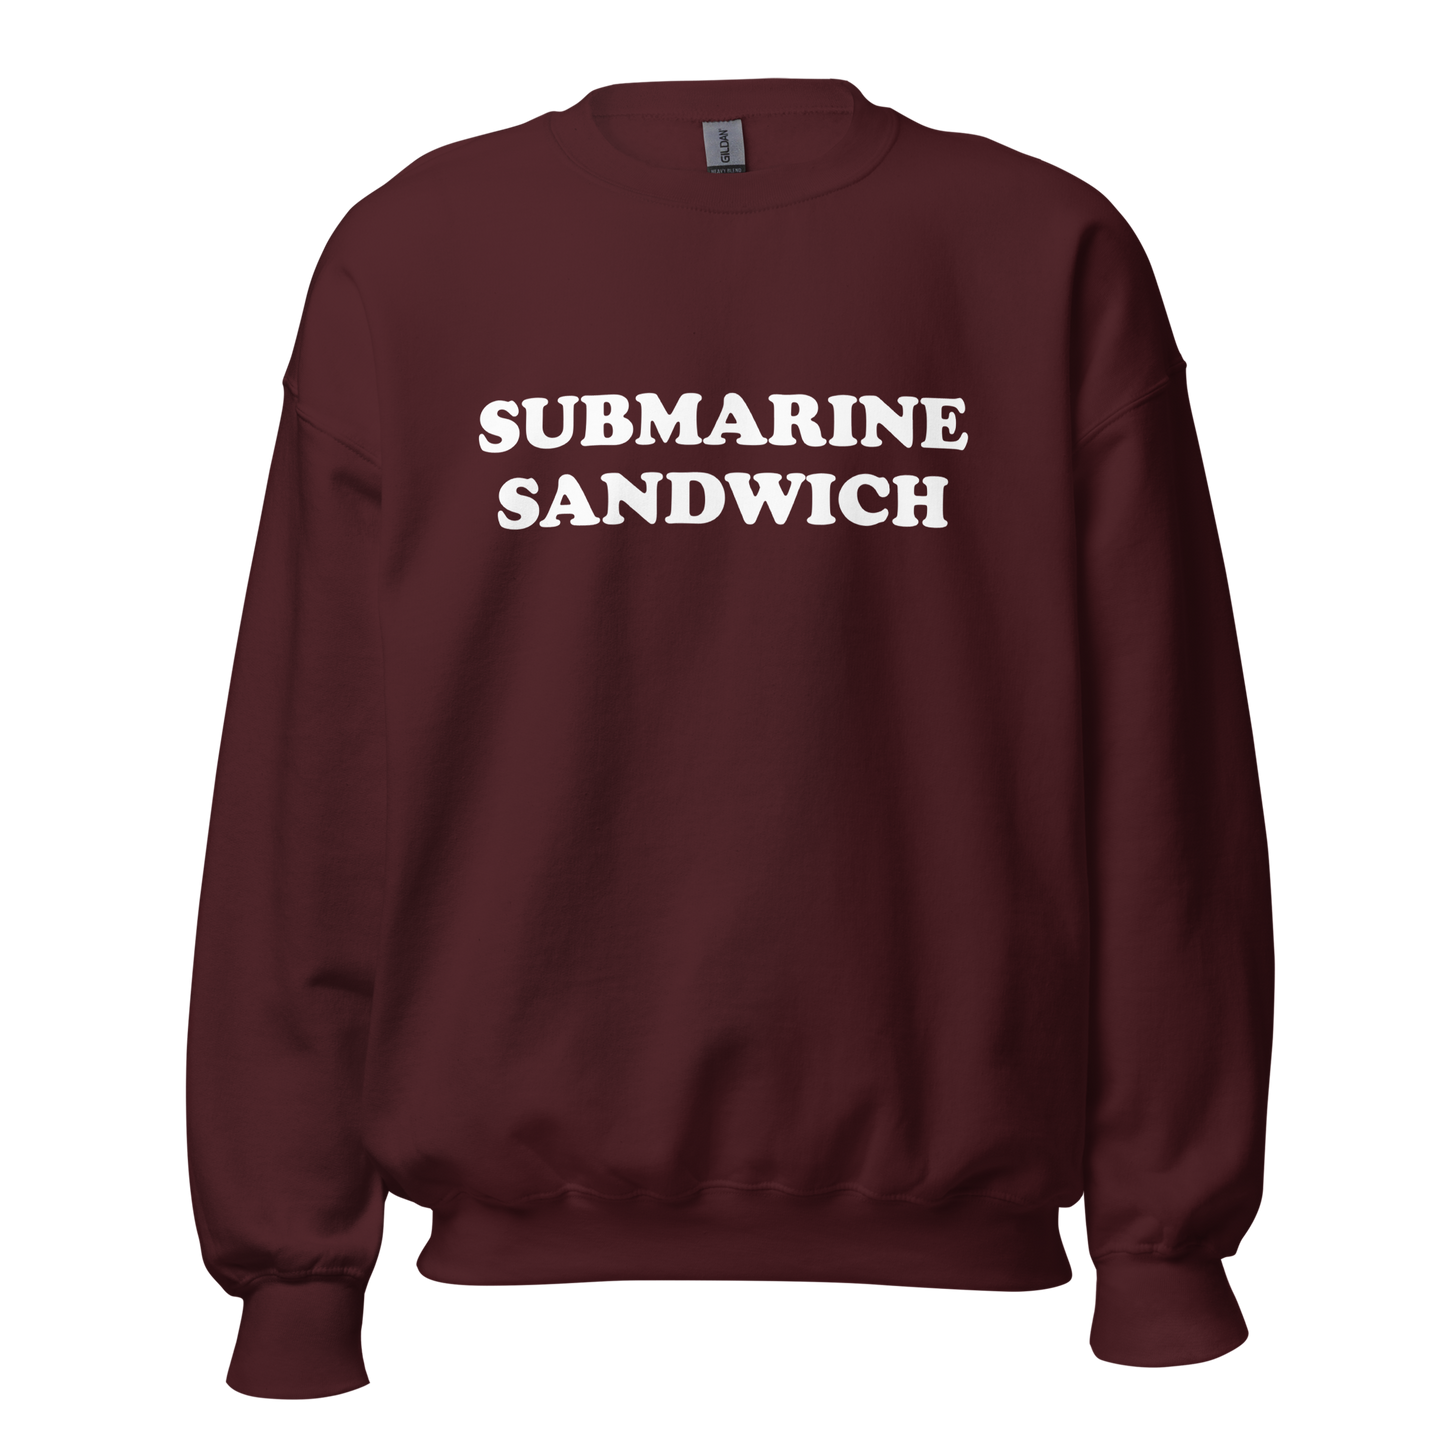 Submarine Sandwich Sweatshirt